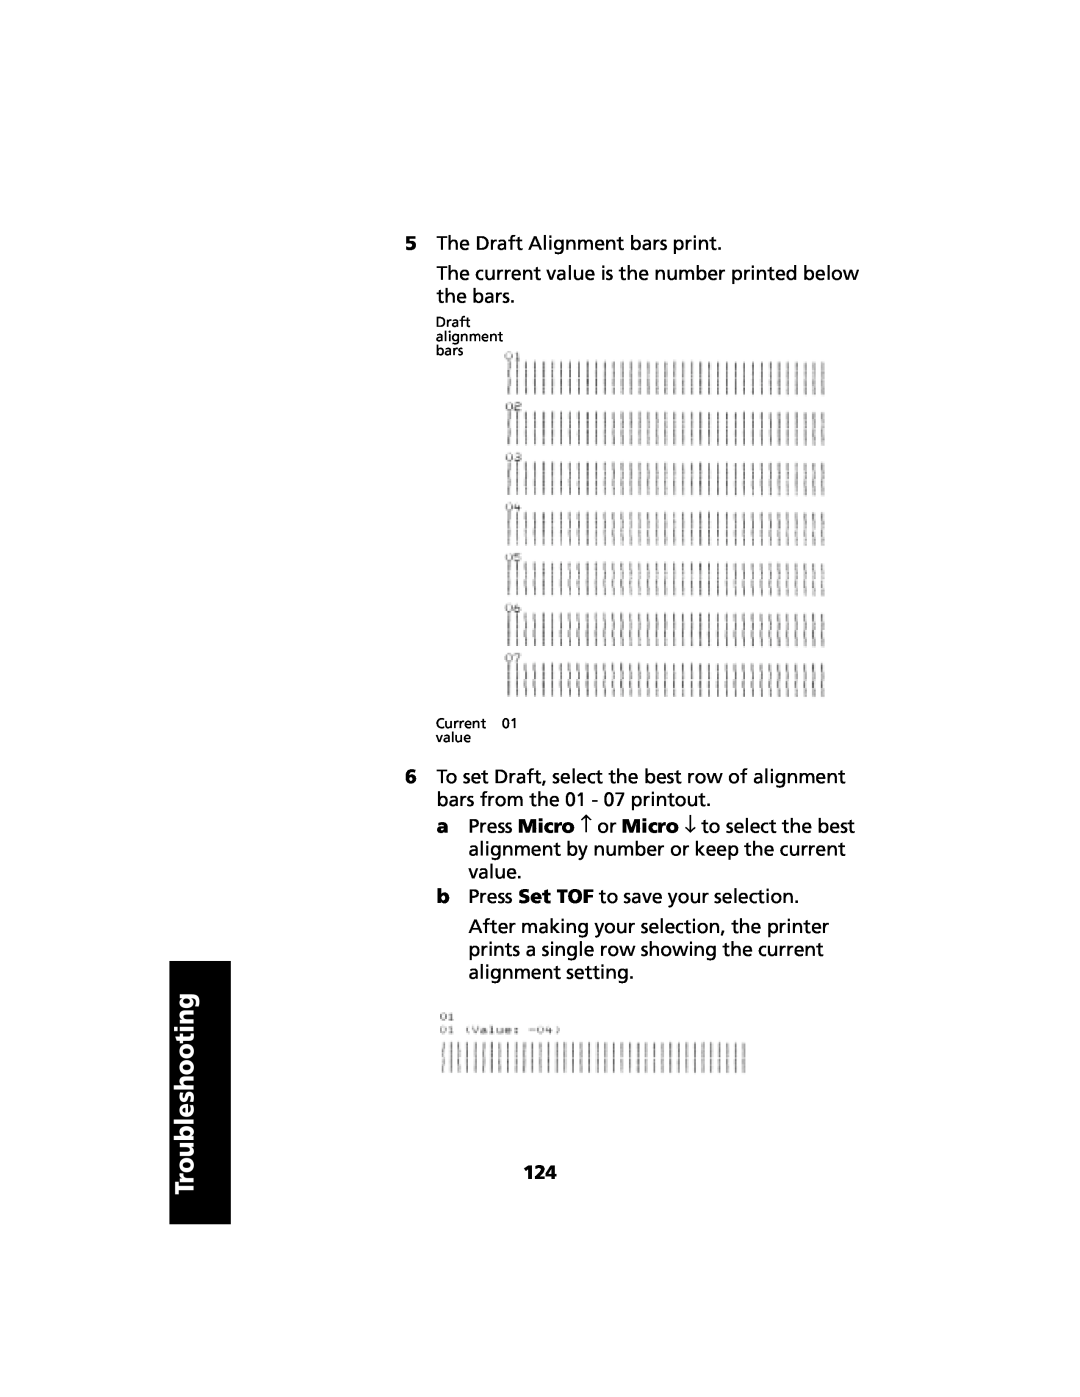 Lexmark 2480 manual Troubleshooting, The Draft Alignment bars print 